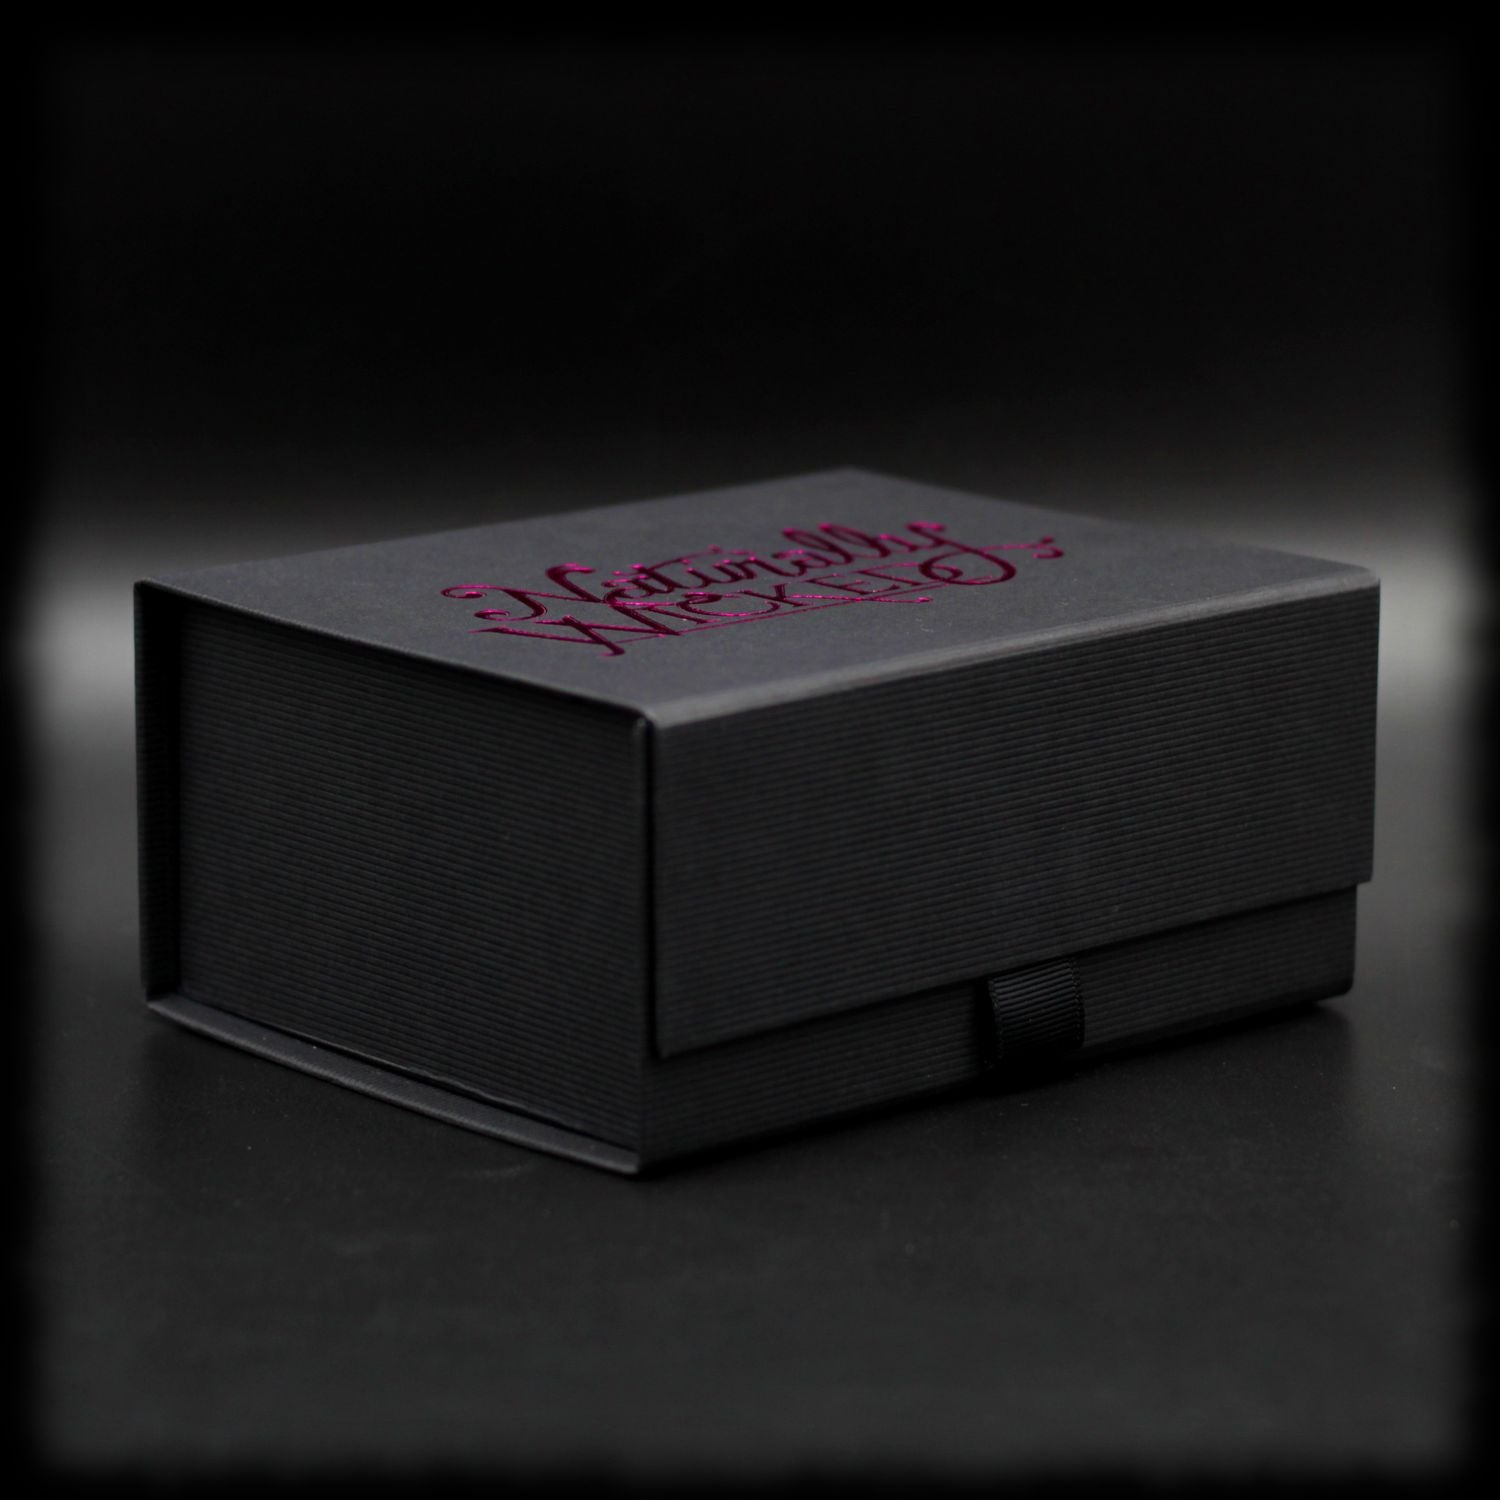 Naturally Wicked Original Beauty Box In Dark Scenery; Dark Black With Pink Metallic Text